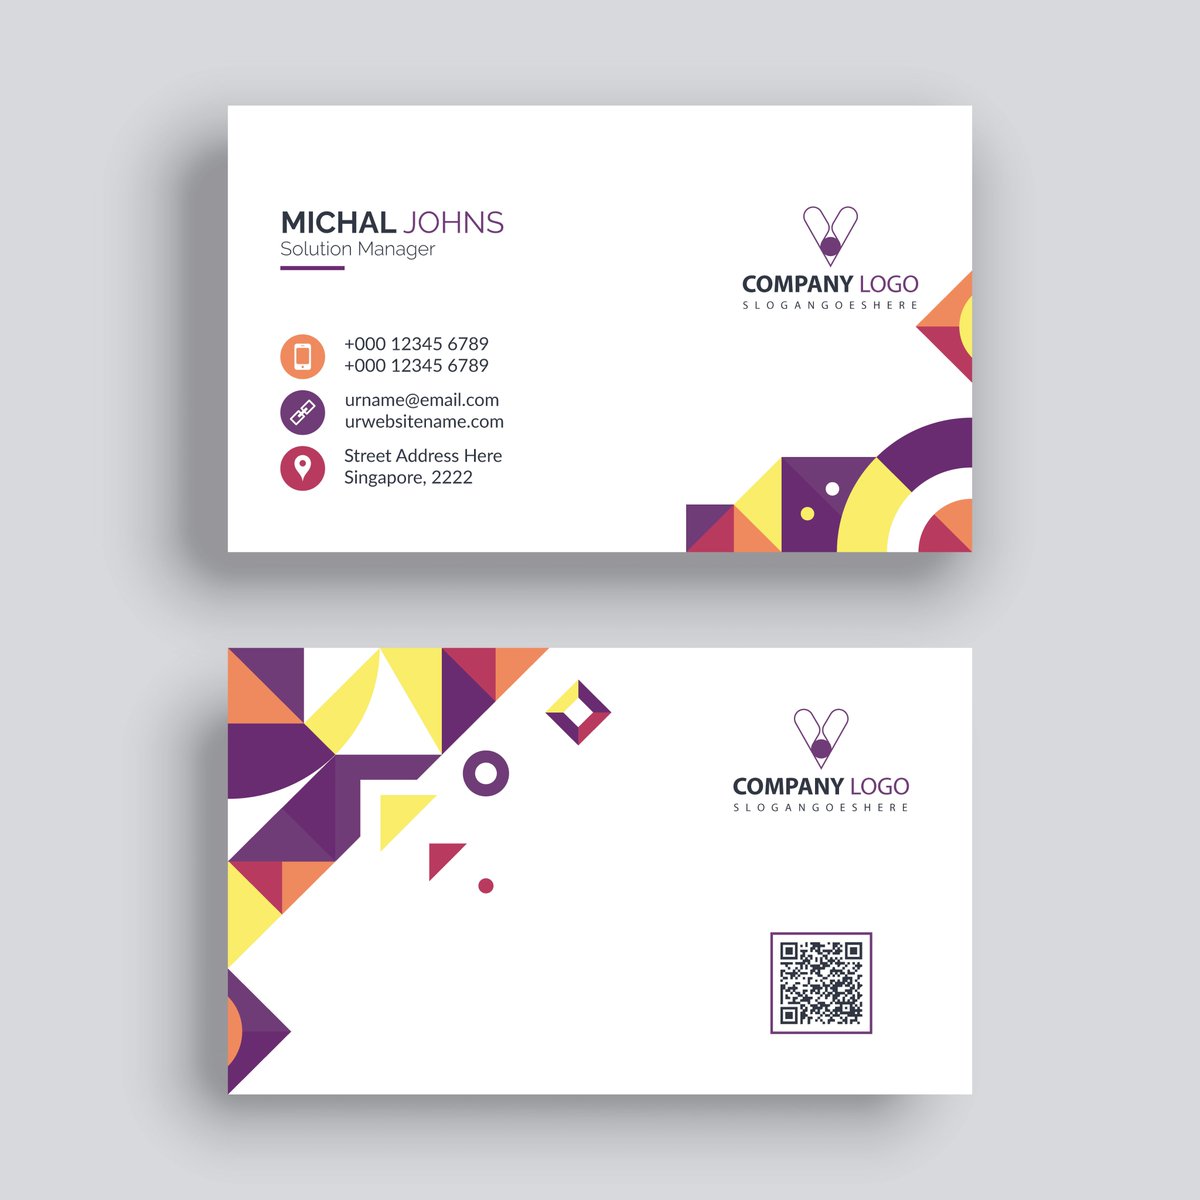 Looking for a unique business card design?  

My portfolio: adobe.ly/3FdukiZ 

#BusinessCardDesign #GraphicDesign #BrandIdentity #Marketing #SmallBusiness #PrintDesign #BusinessCardsPrinting #CustomBusinessCards #ProfessionalDesign #VisualIdentity #BrandingExpert